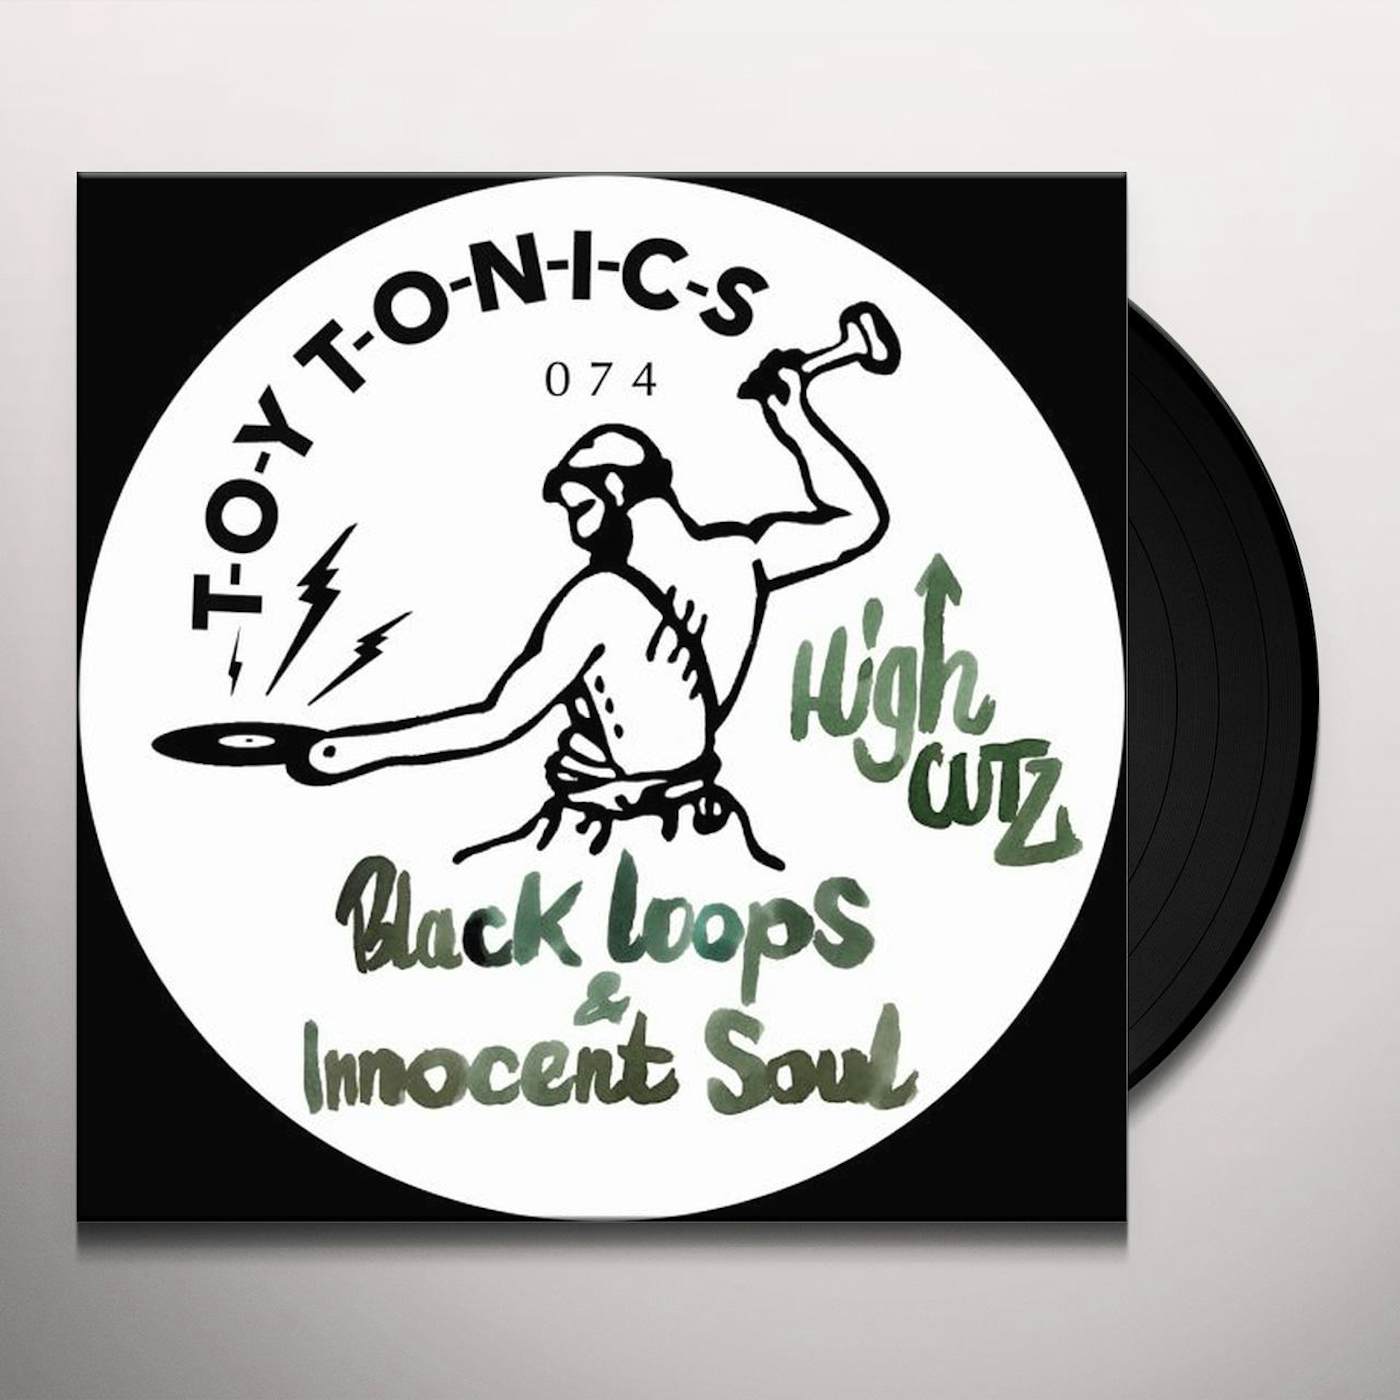 Black Loops & Innocent Soul High Cutz Vinyl Record